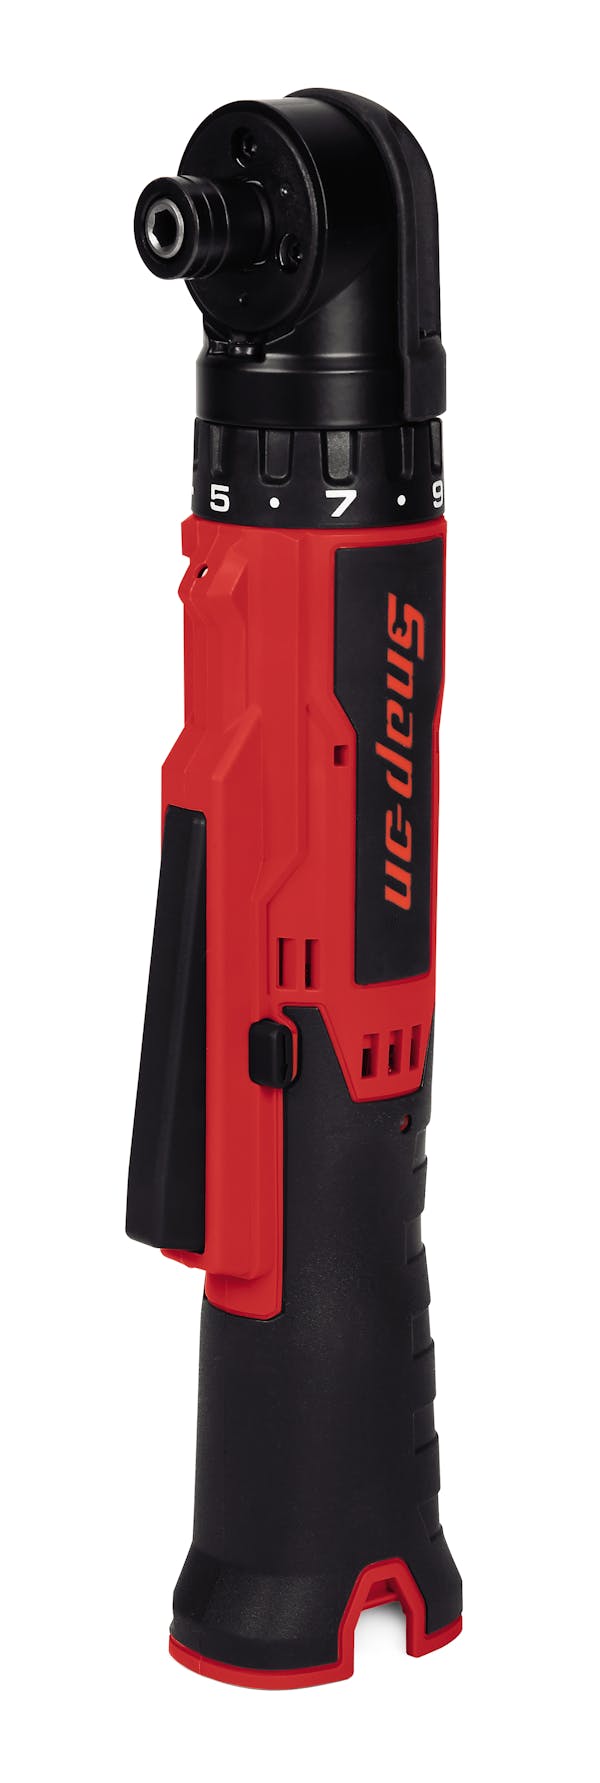 14.4 V MicroLithium Cordless Right Angle Mini Drill Kit (Red